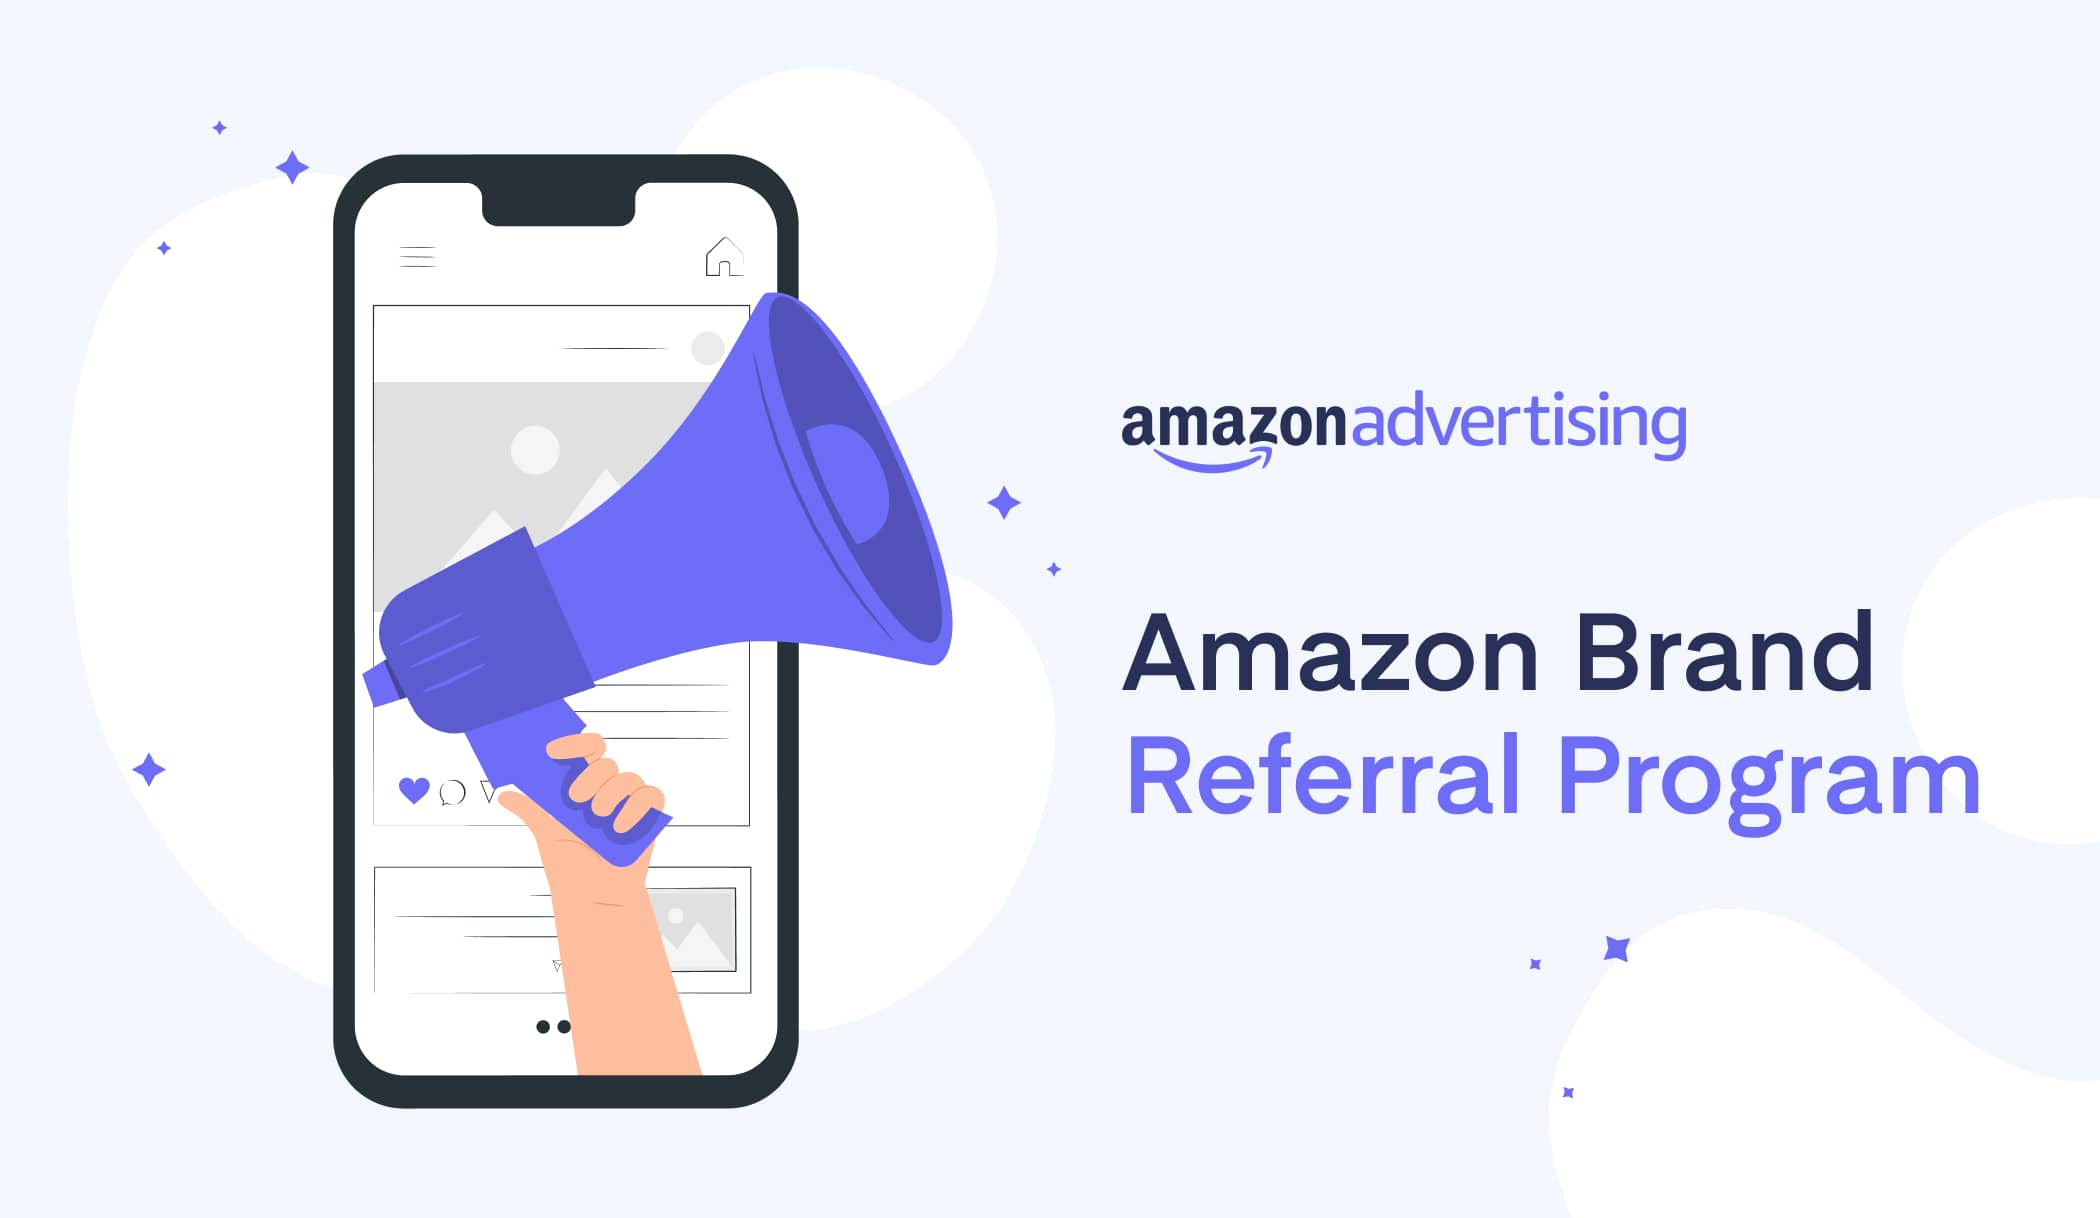 Amazon Referral Program